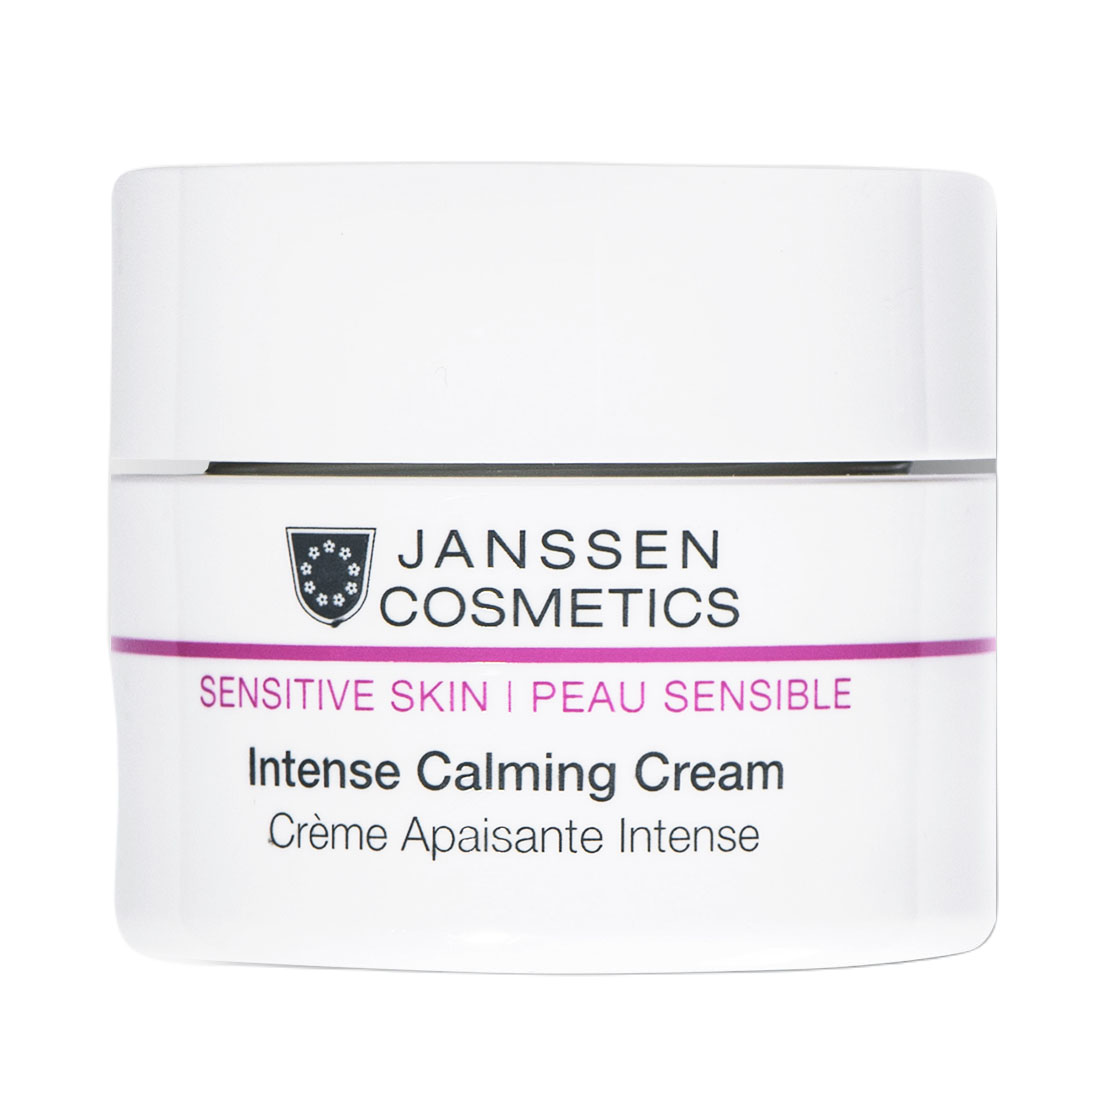 Janssen Cosmetics Успокаивающий крем интенсивного действия Intense Calming Cream, 50 мл (Janssen Cosmetics, Sensitive skin)